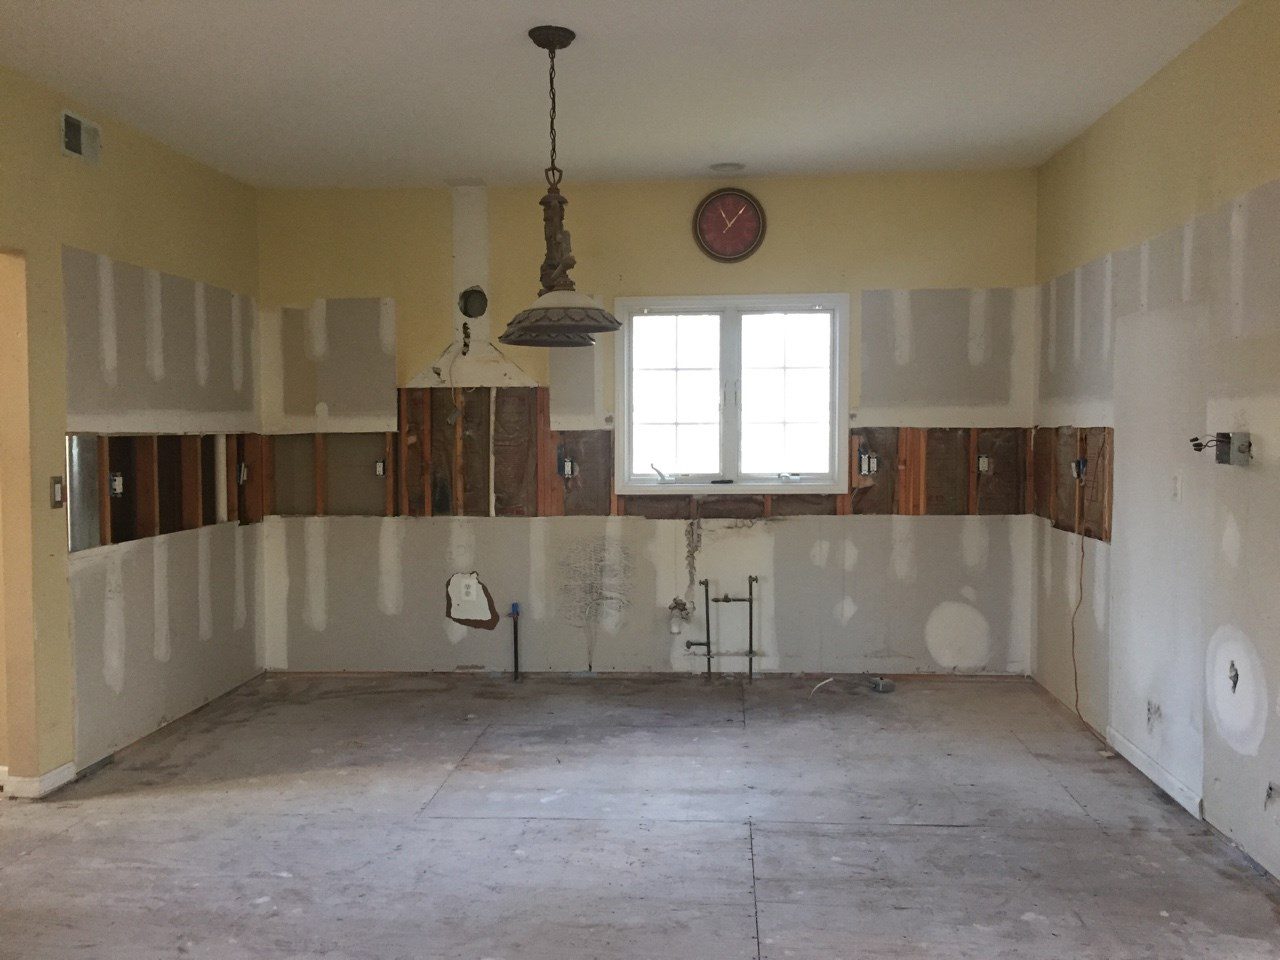 Full Home Remodel Cedar Grove NJ Kitchen Suburban Elegance Project in Process